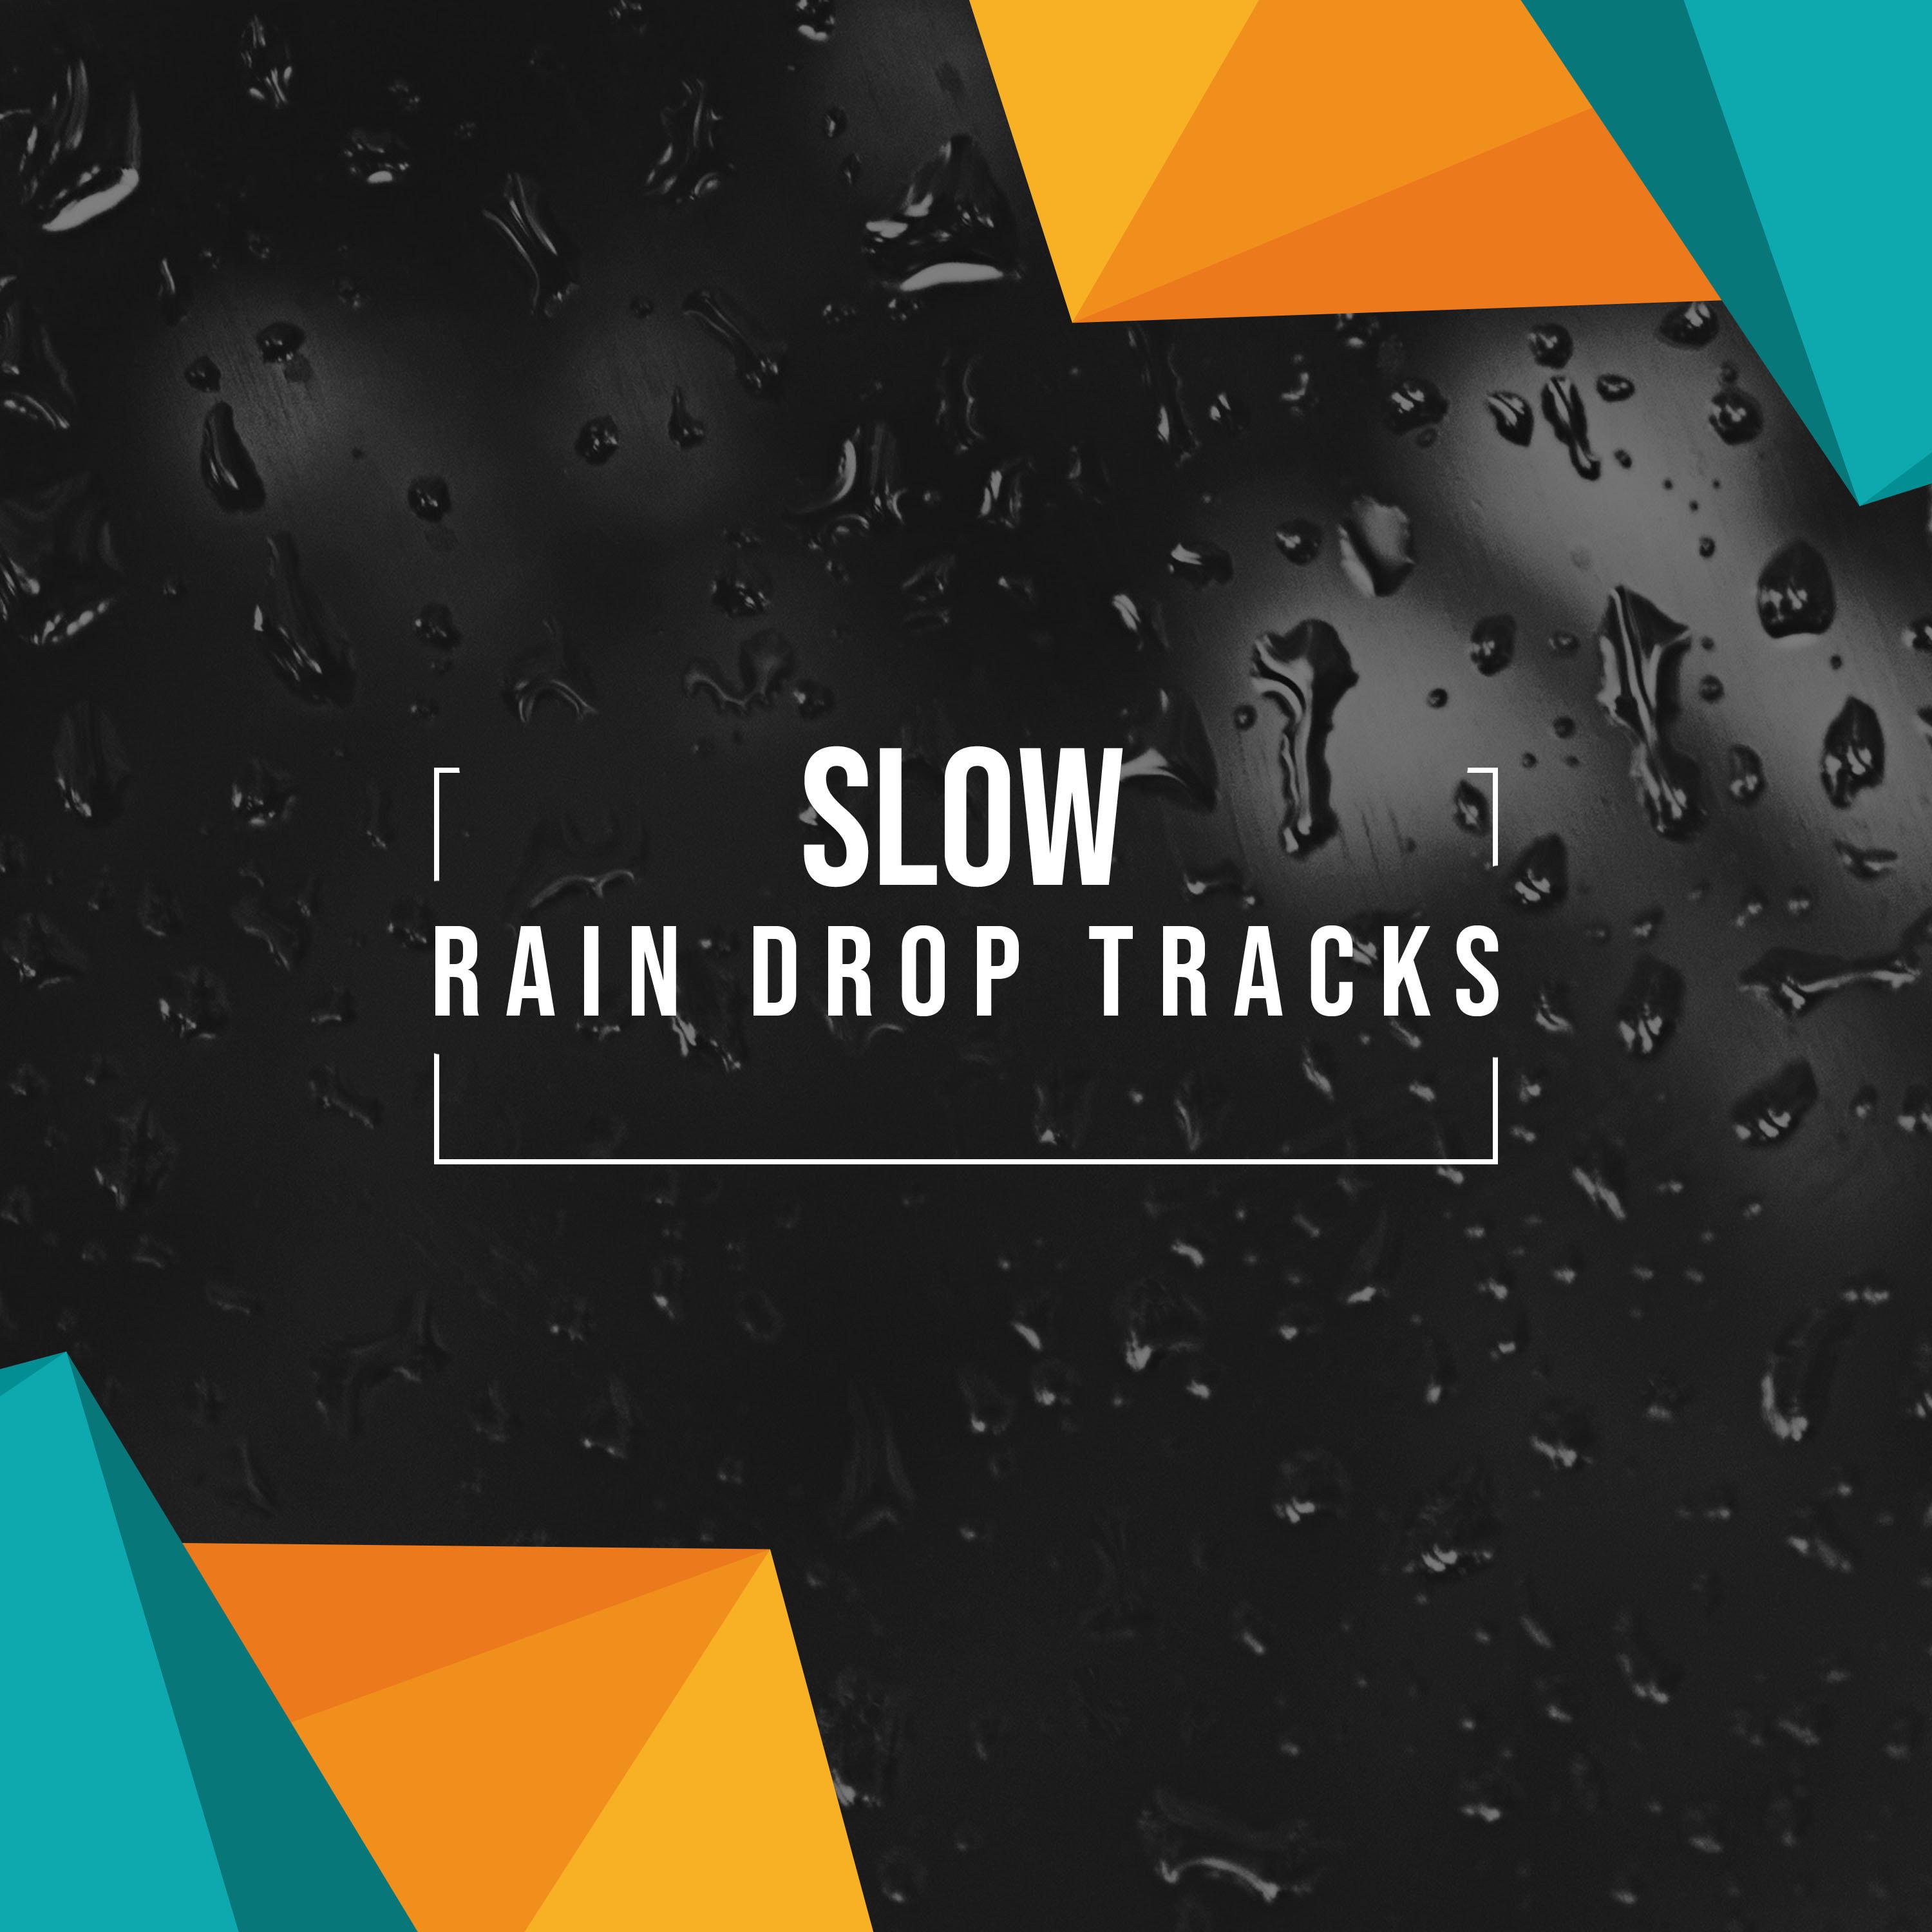 #19 Slow Rain Drop Tracks